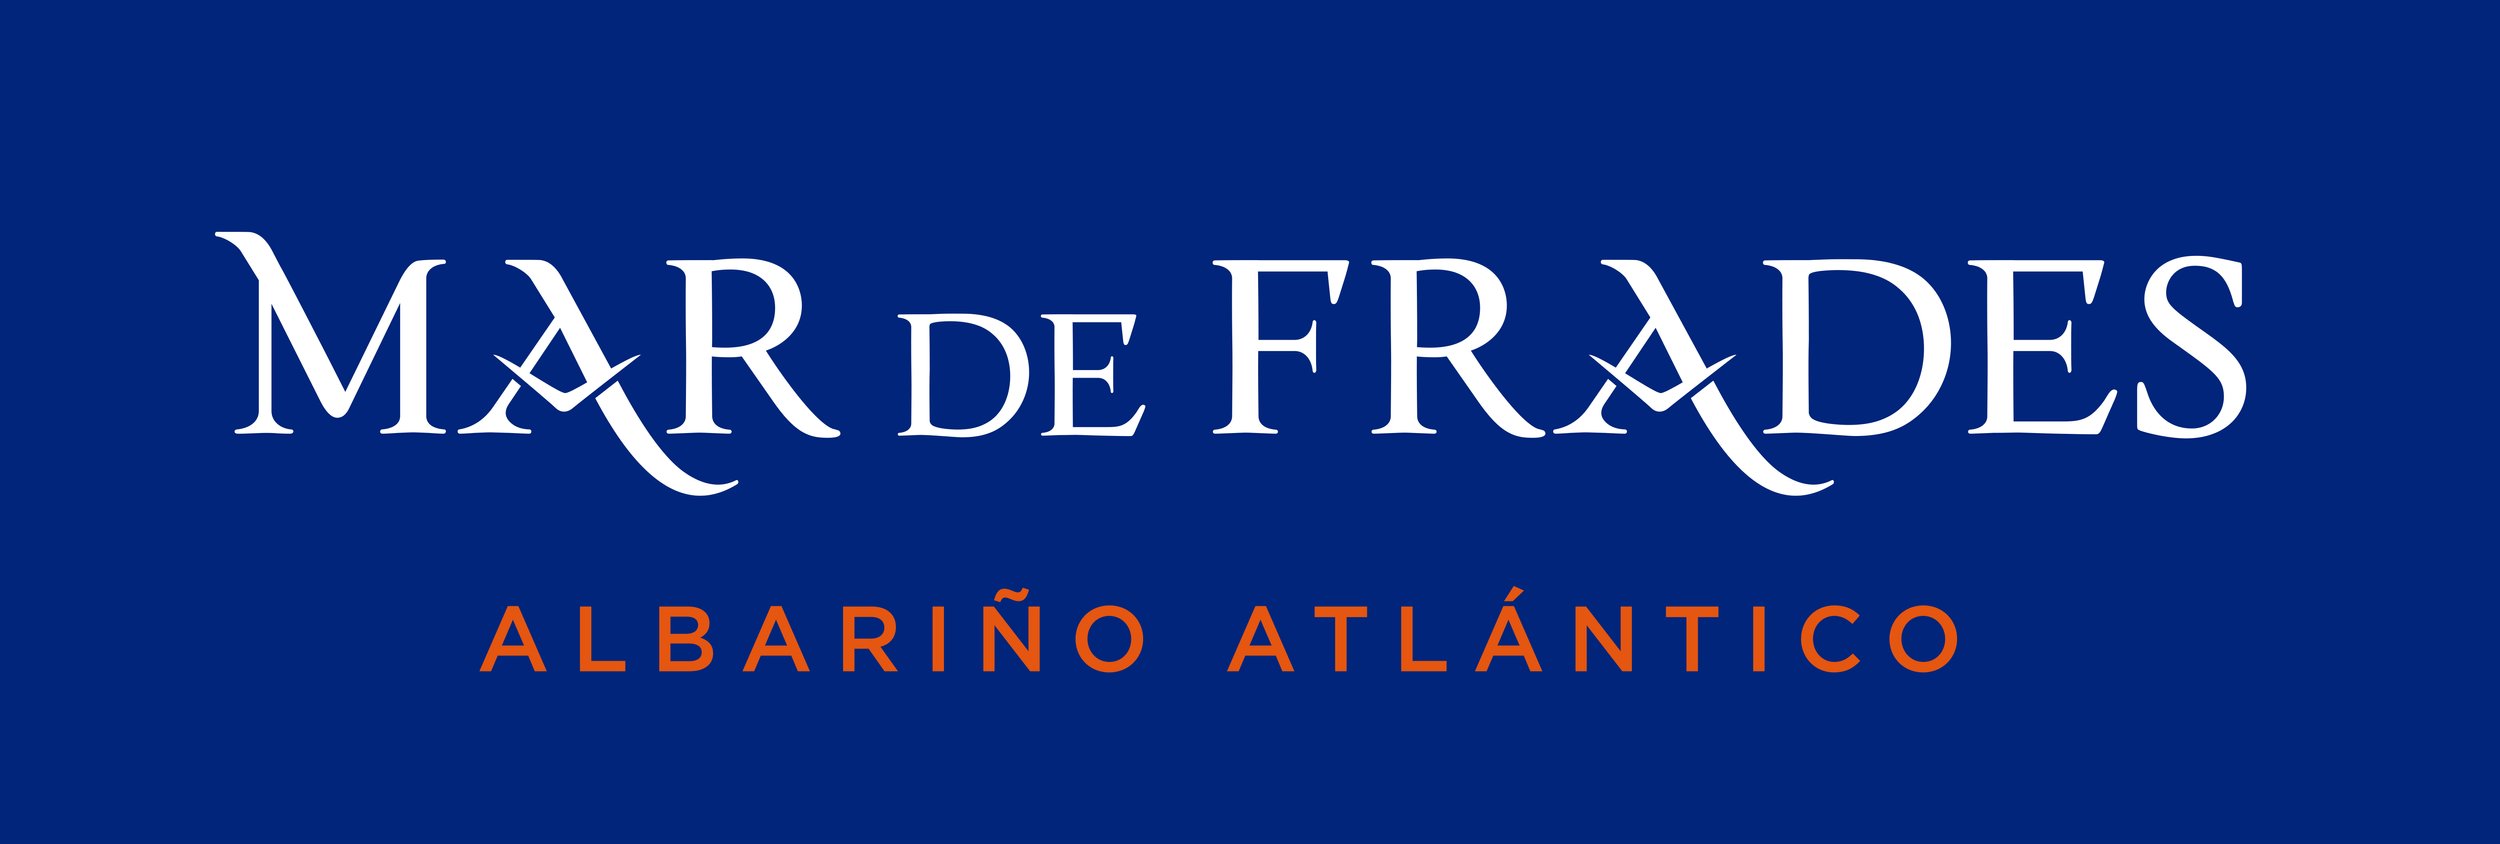 Mar de Frades logo.jpg